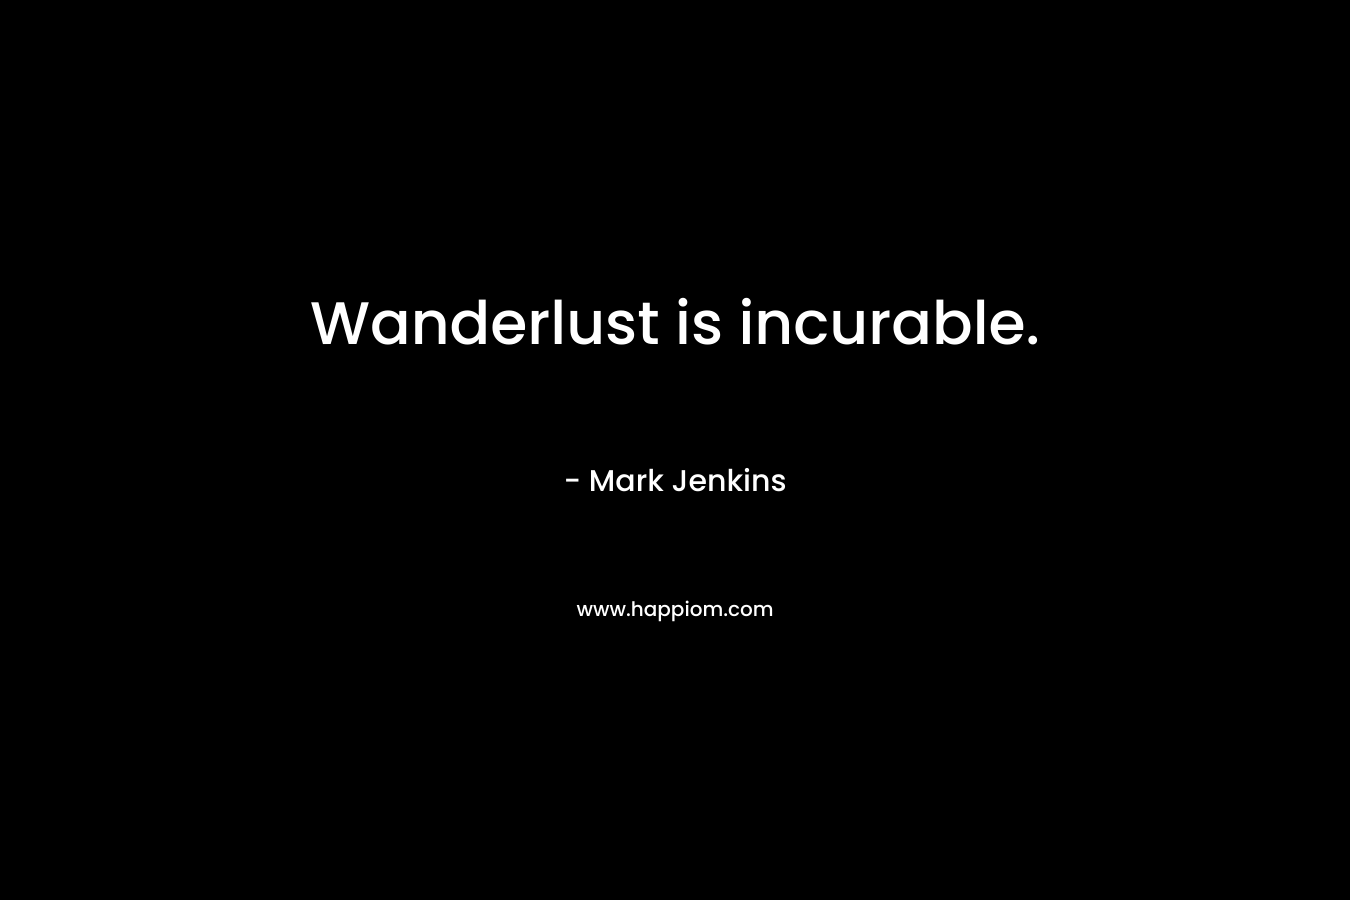 Wanderlust is incurable.